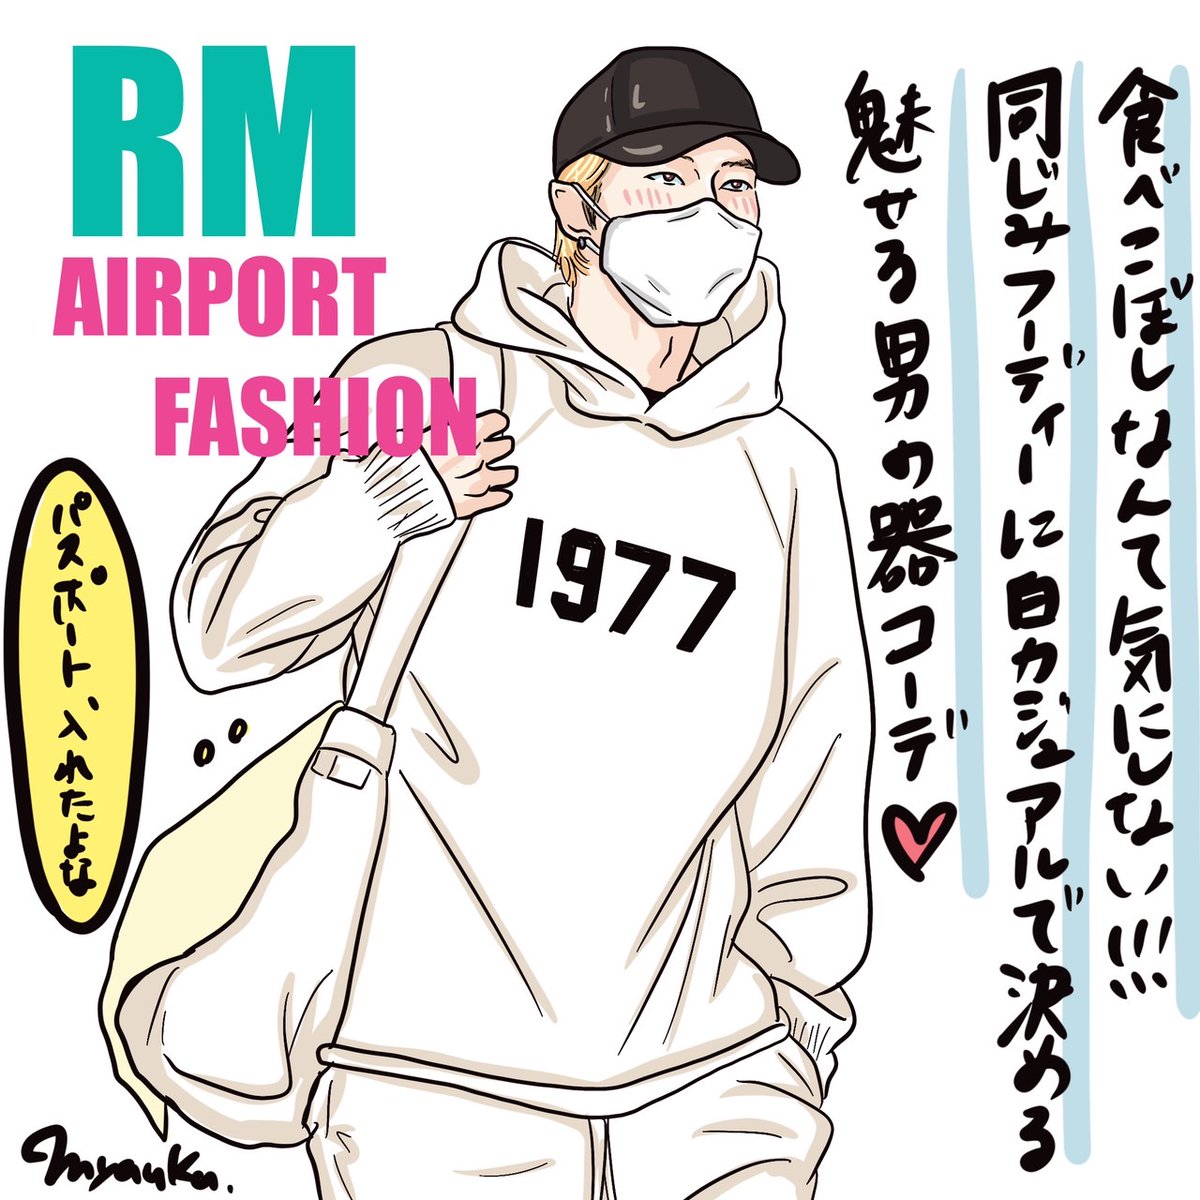 RM'S AIRPORT FASHION～💕💕💕
#BTS #BTSARMY #BTSART #btsfanart #RM #rmfanart #illustration #방탄소년단 @bts_bighit @BTS_twt 